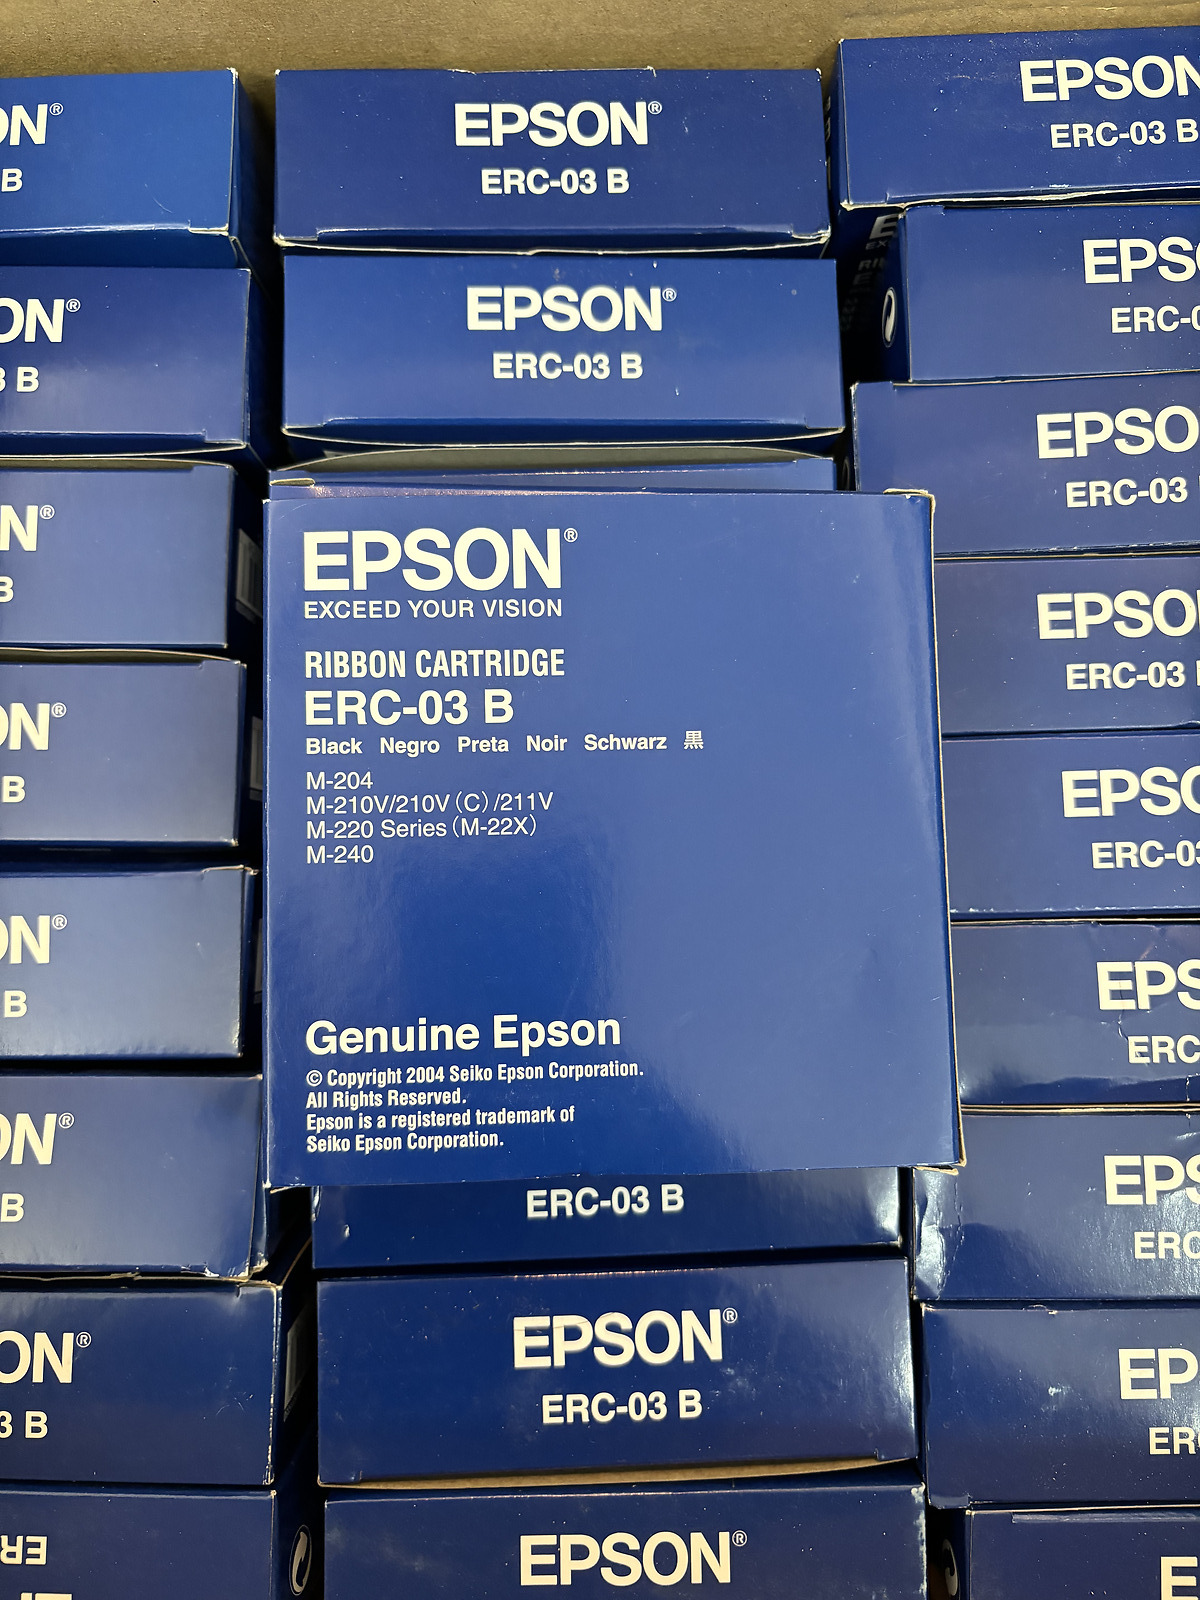 Epson ERC-03 B Ribbon Cartridge Black - 2 pack